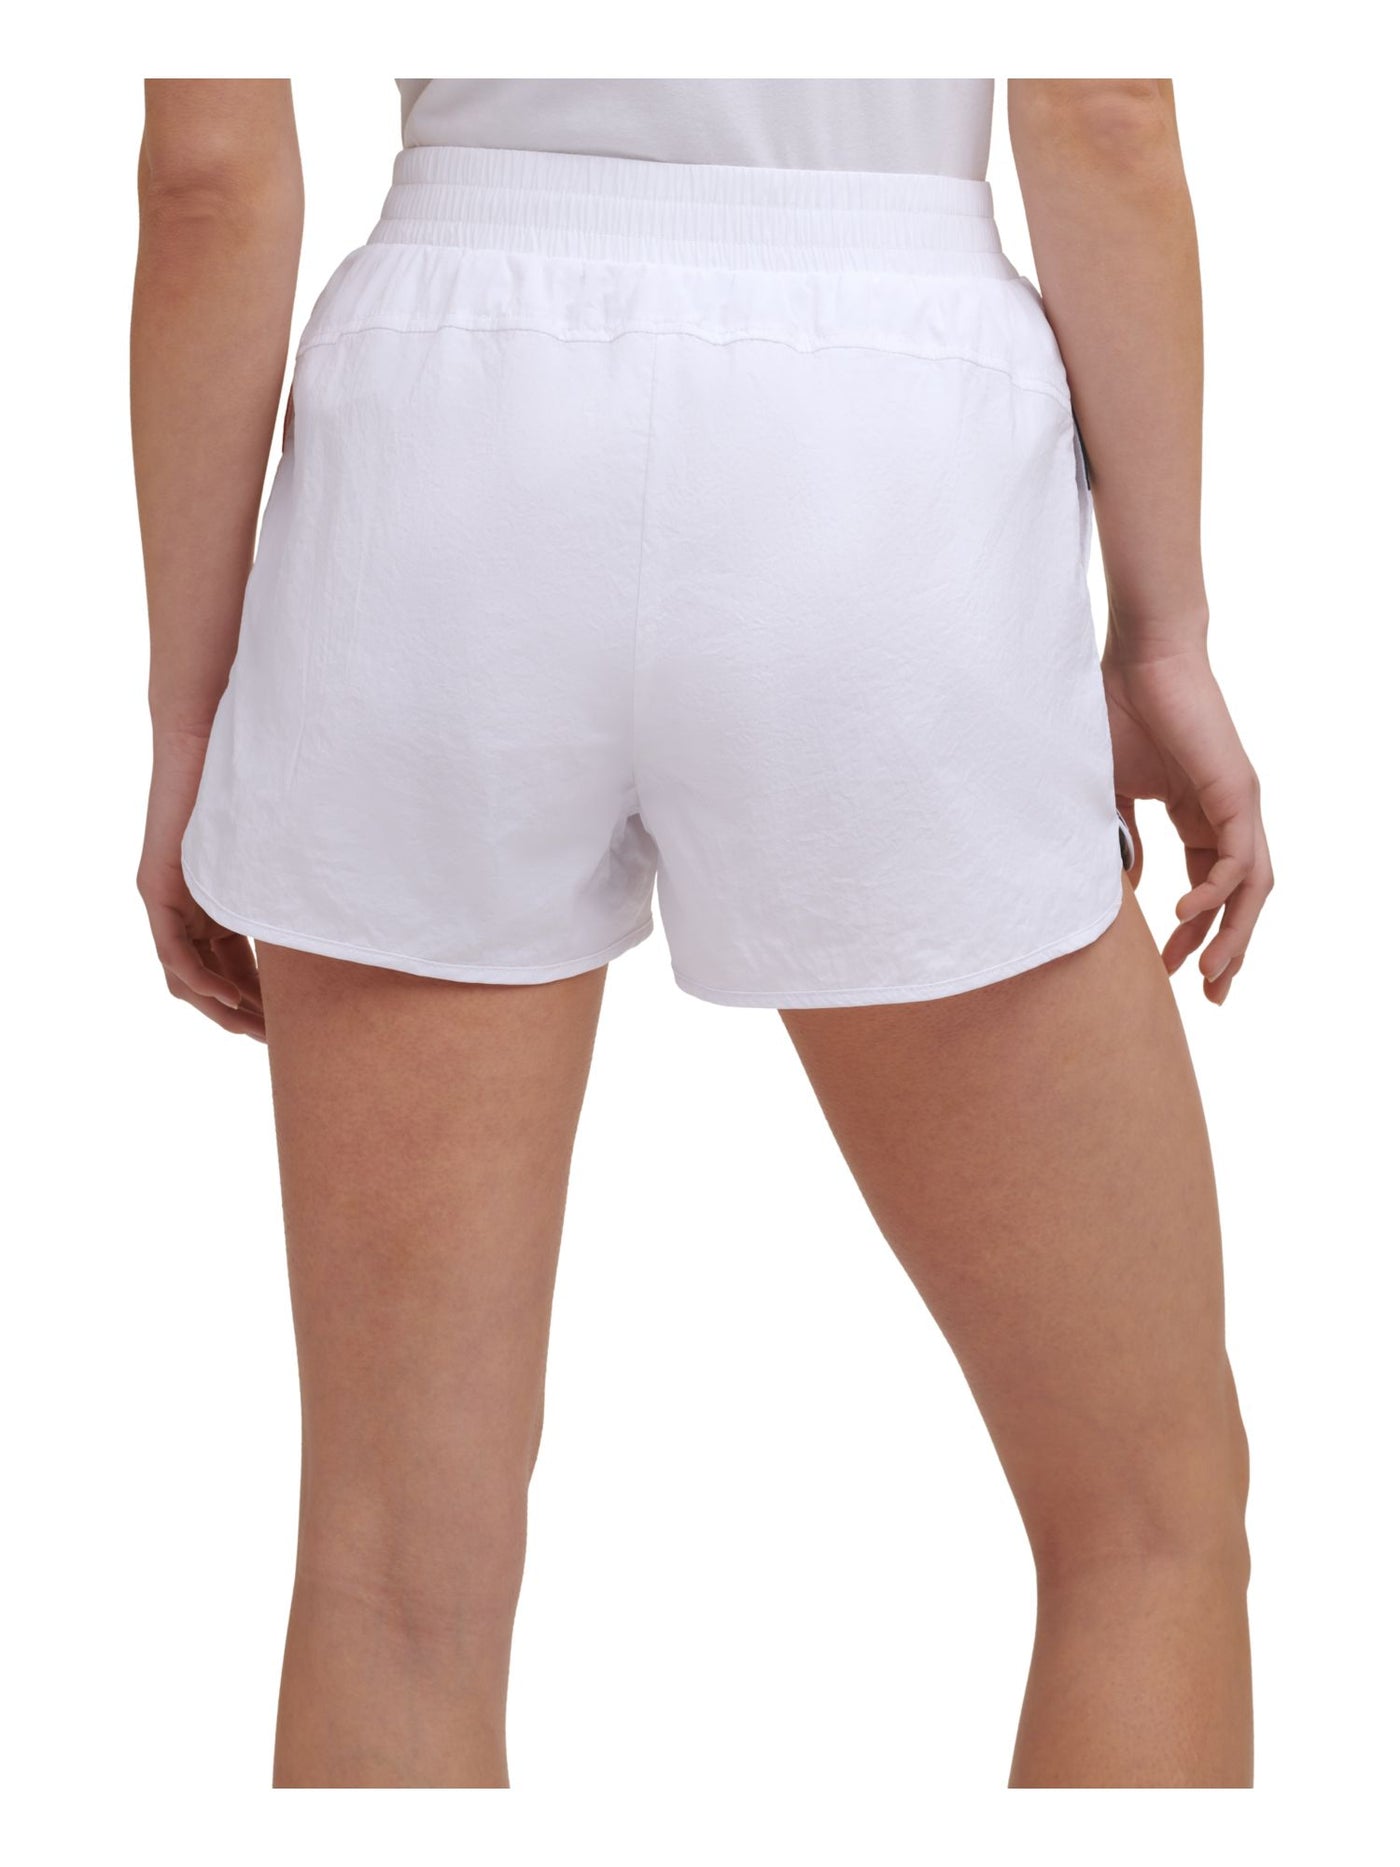 TOMMY HILFIGER SPORT Womens White Stretch Active Wear Shorts XXL